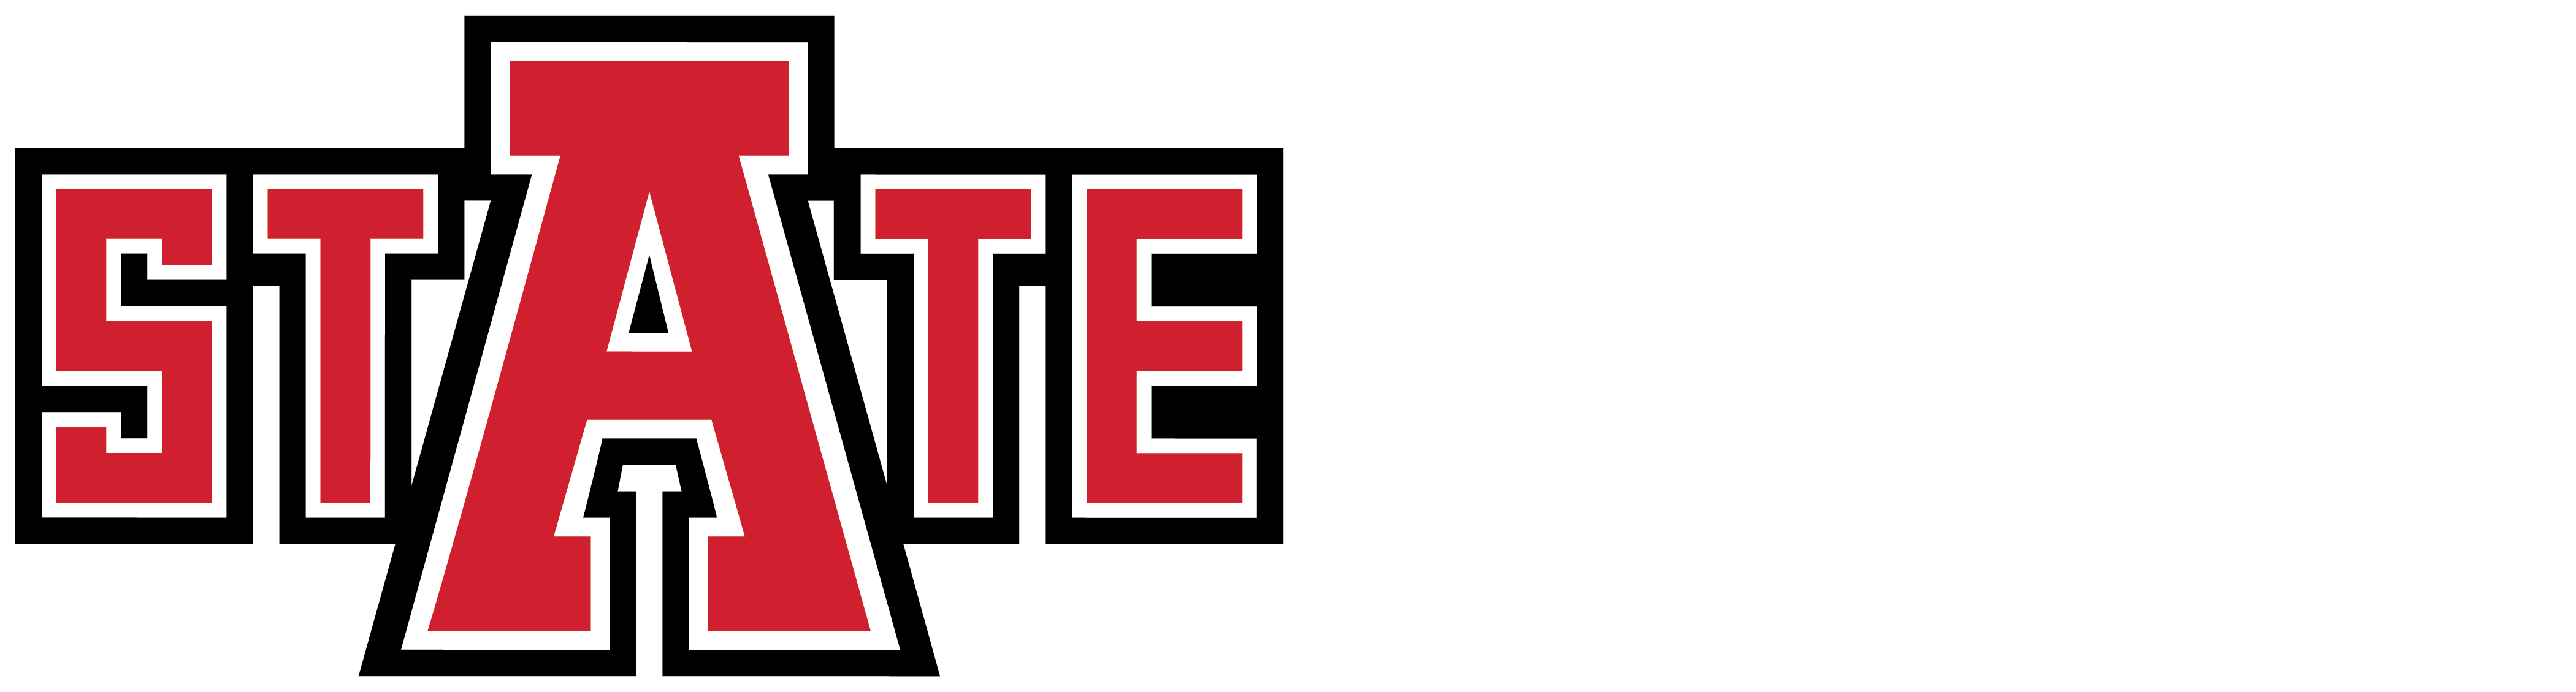 University Logo Horizontal - 2 Color PNG